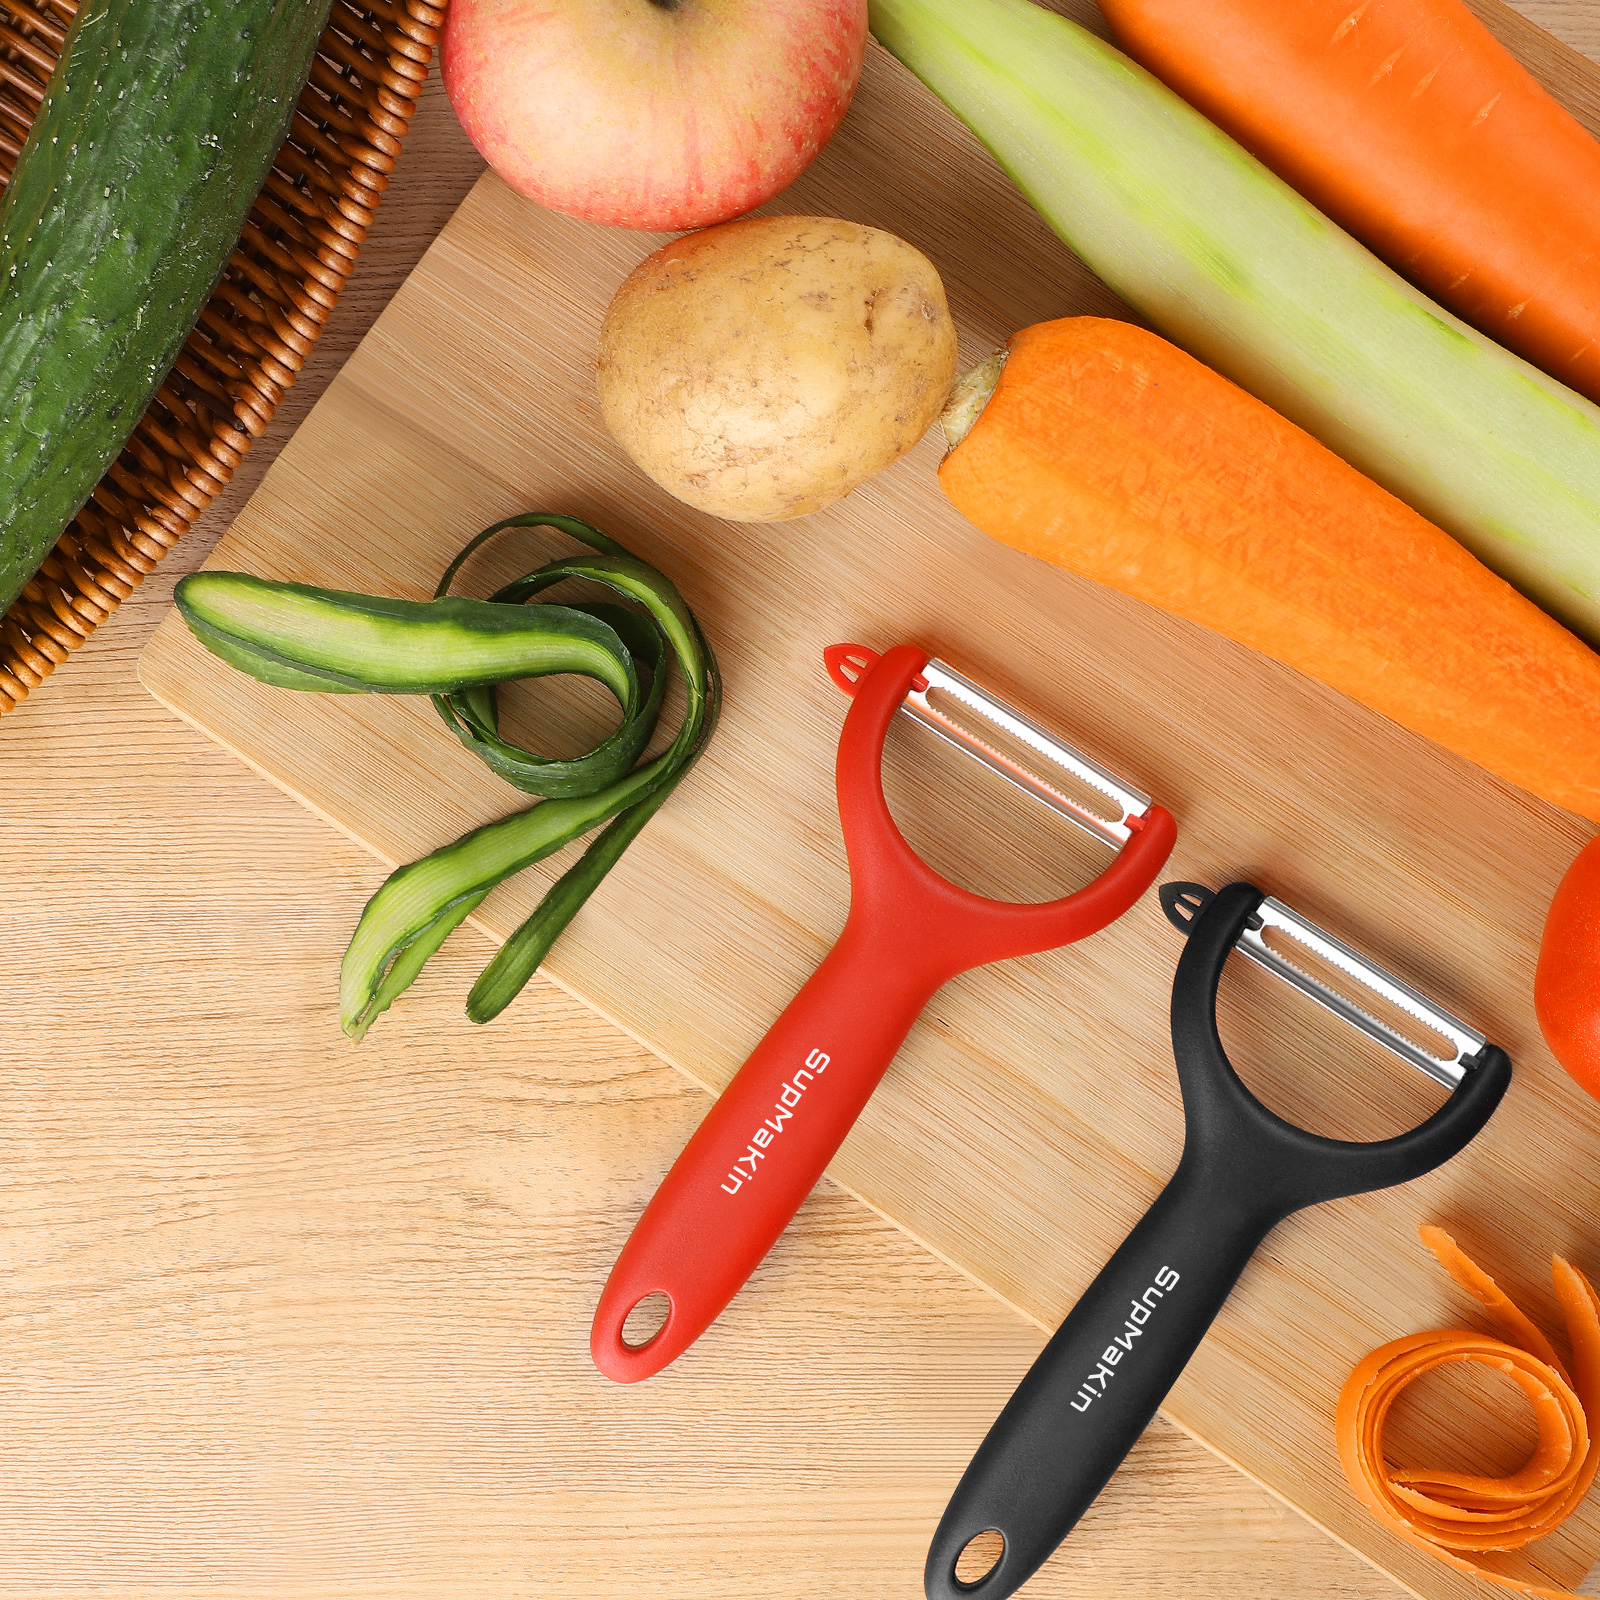 Ceramic Blade Y-Shape Vegetable Peeler – My Kitchen Gadgets